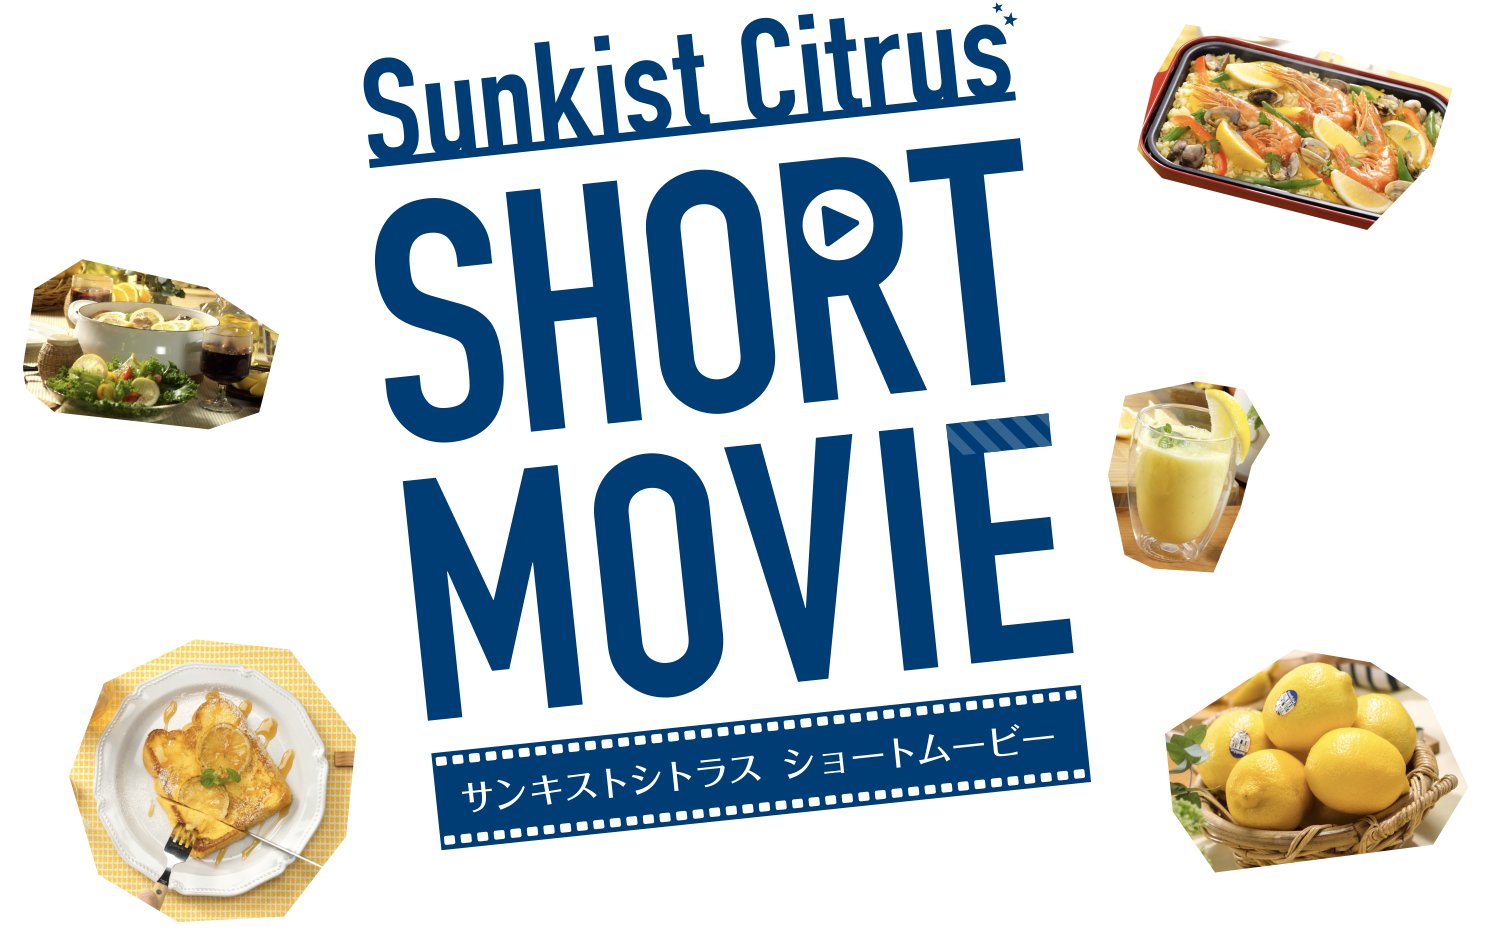 Sunkist Citrus Short Movie - サンキストシトラス ショートムービー